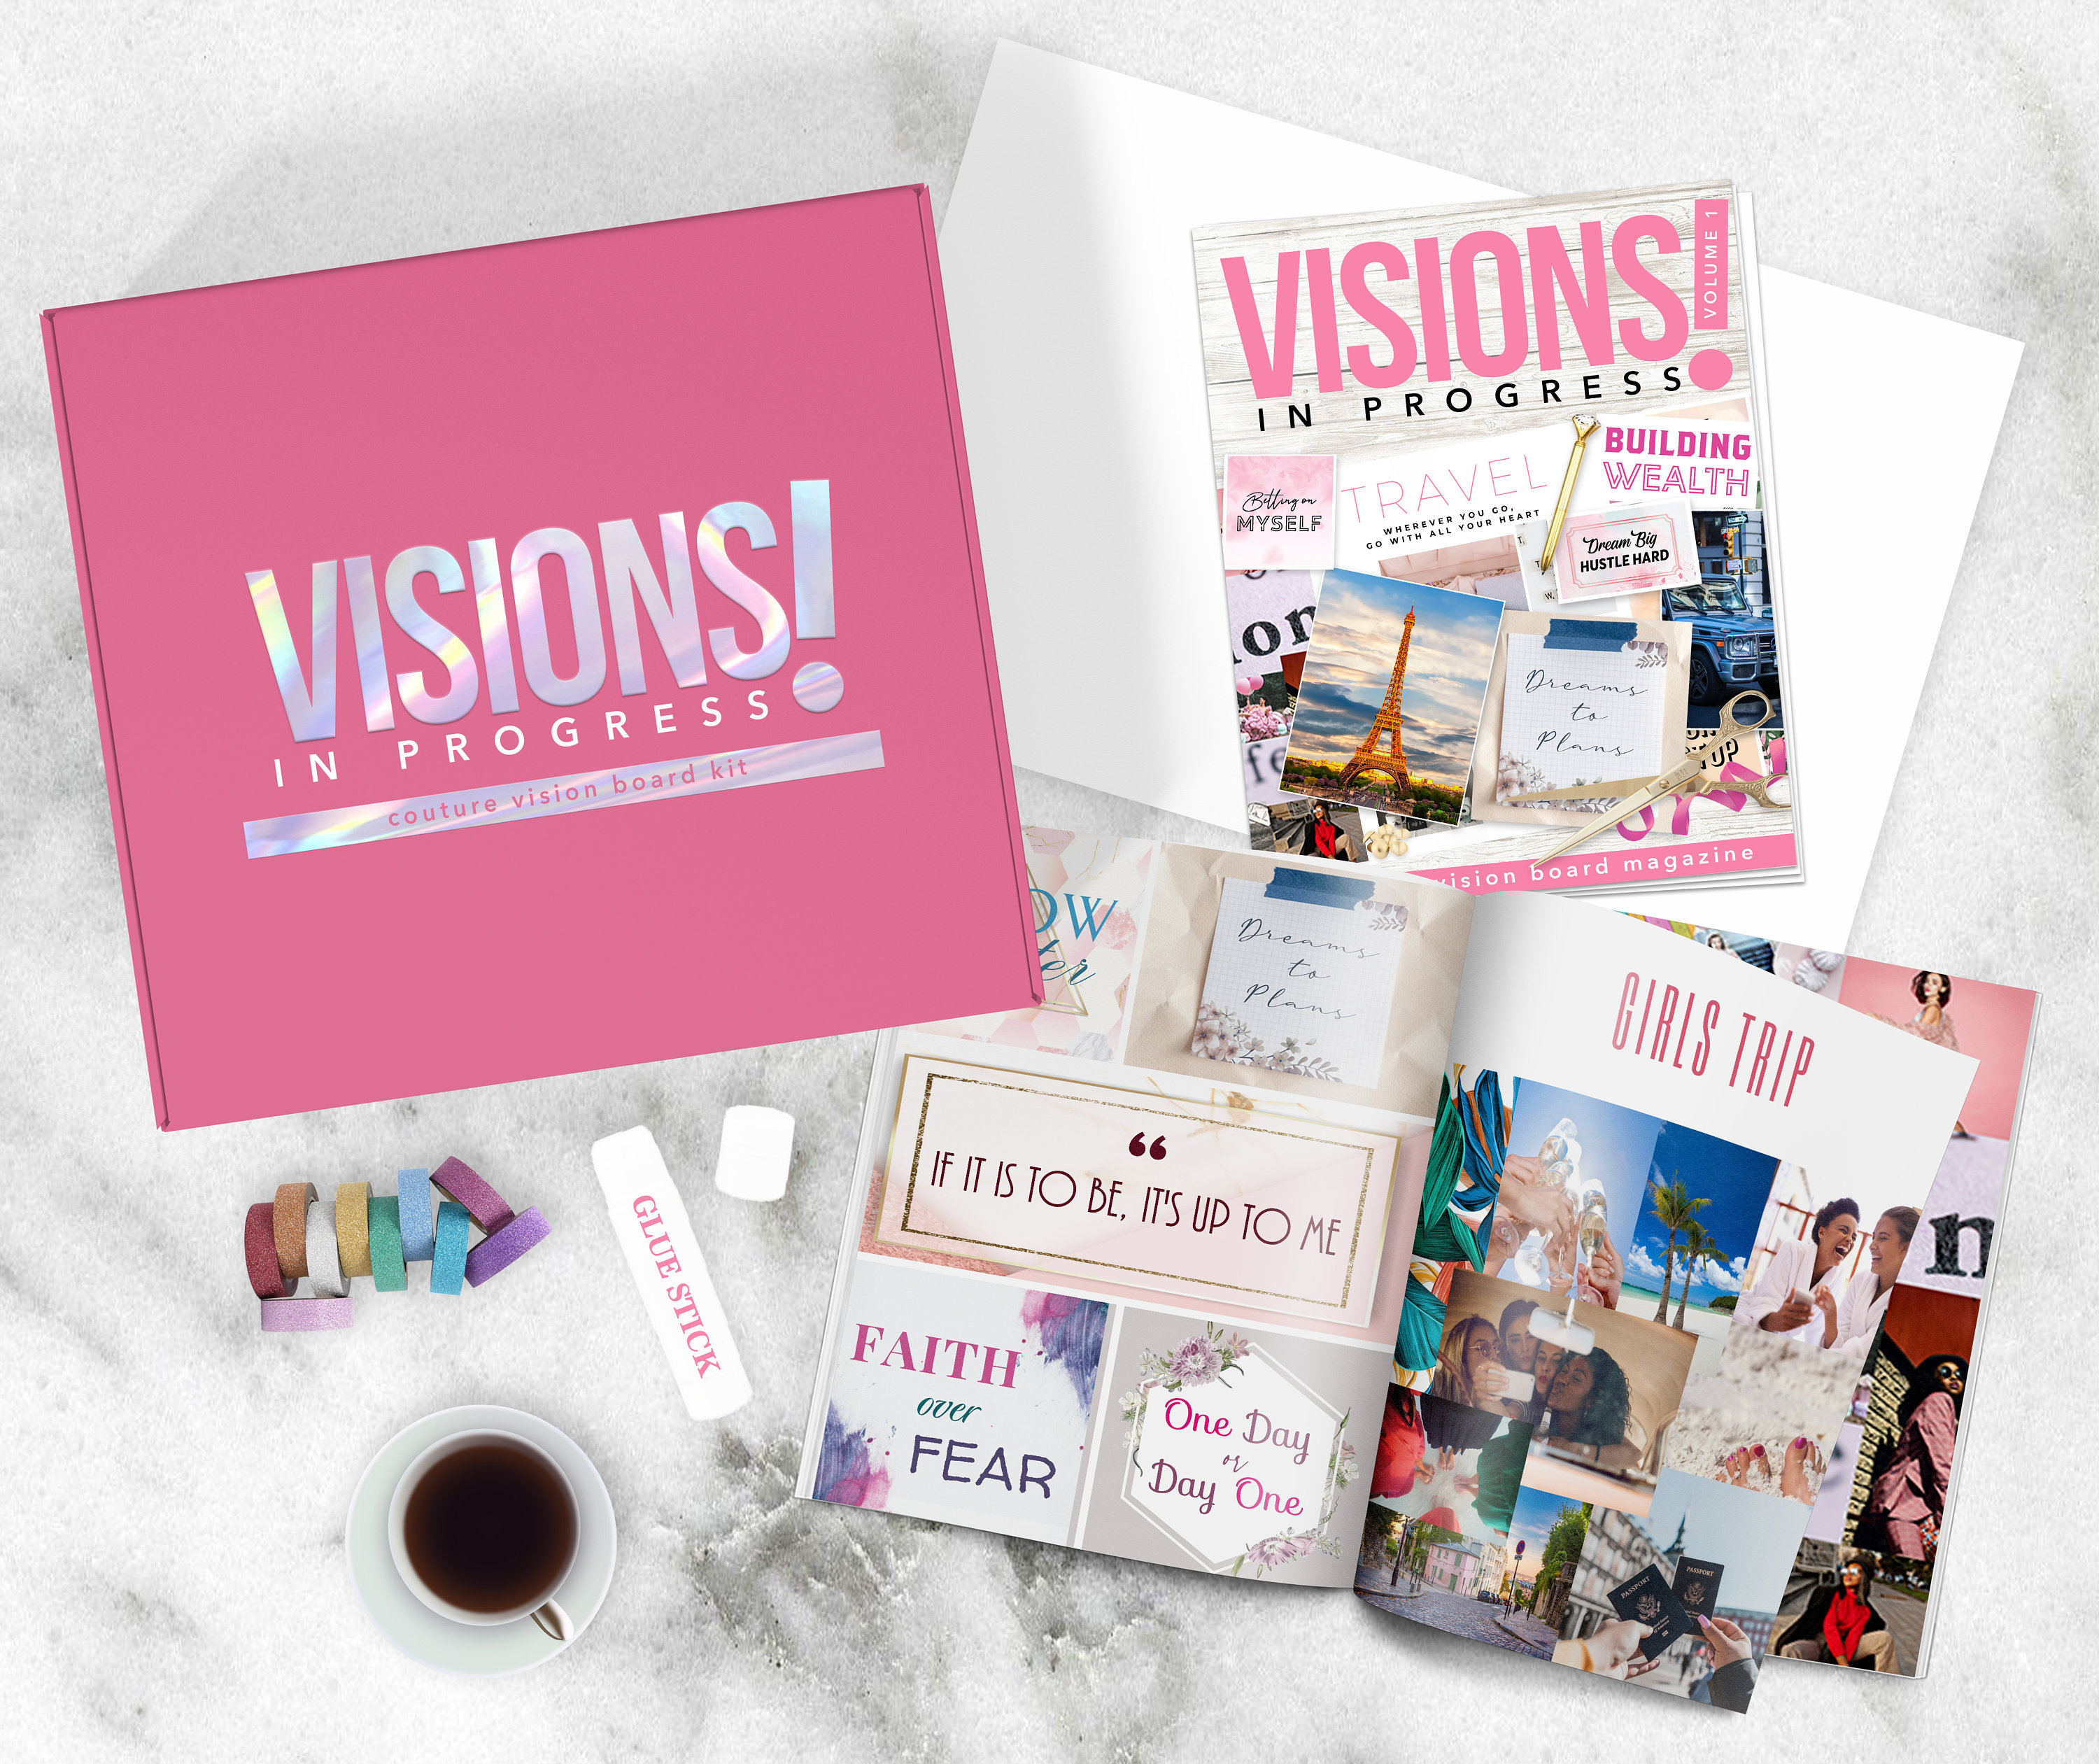 Vision Board Book for Black Women - 800+ Vision Board Supplies